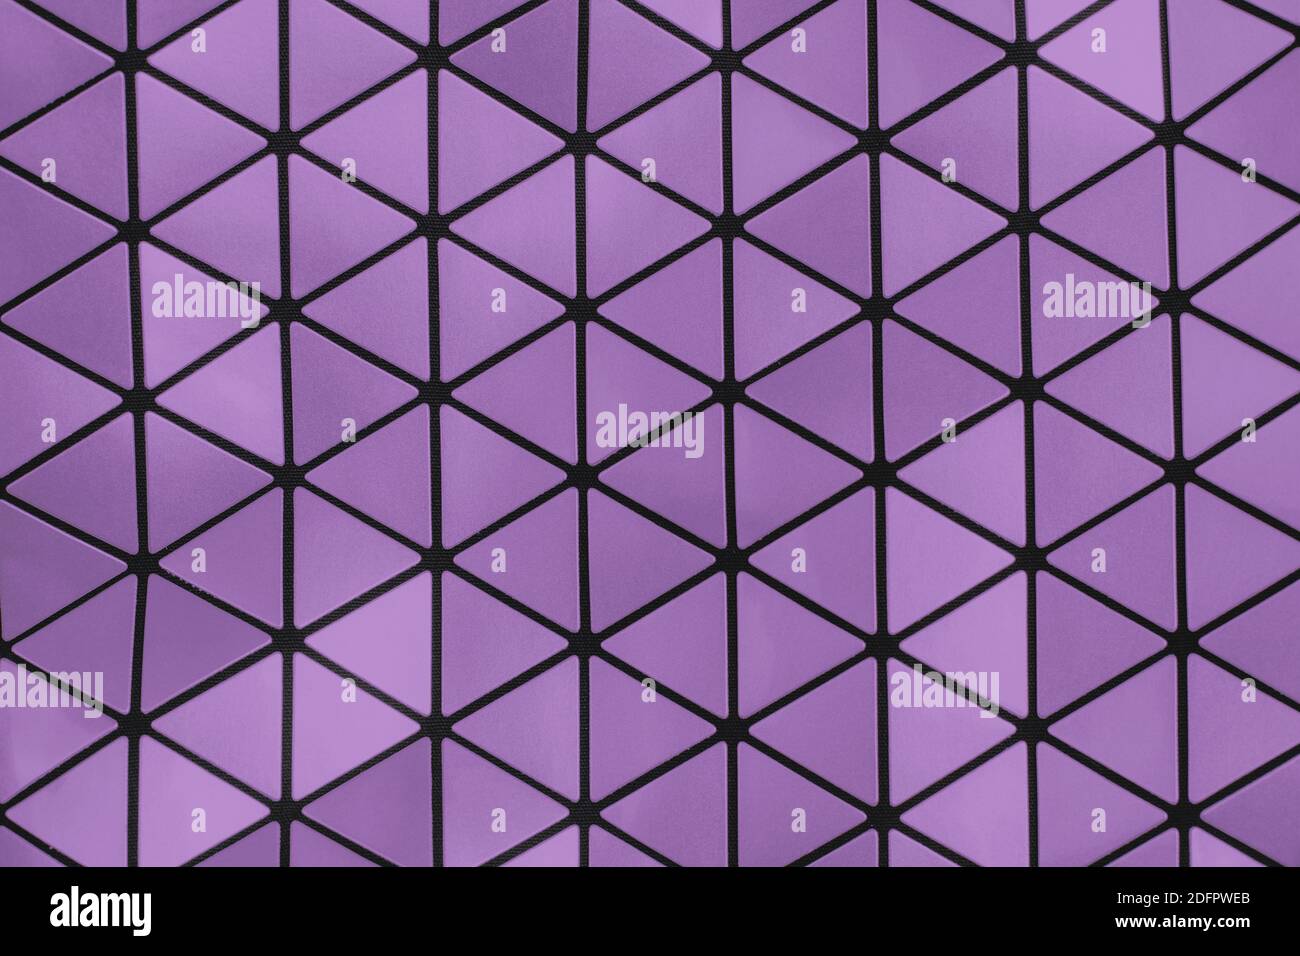 purple and black colored abstract futuristic metallic geometric background Stock Photo